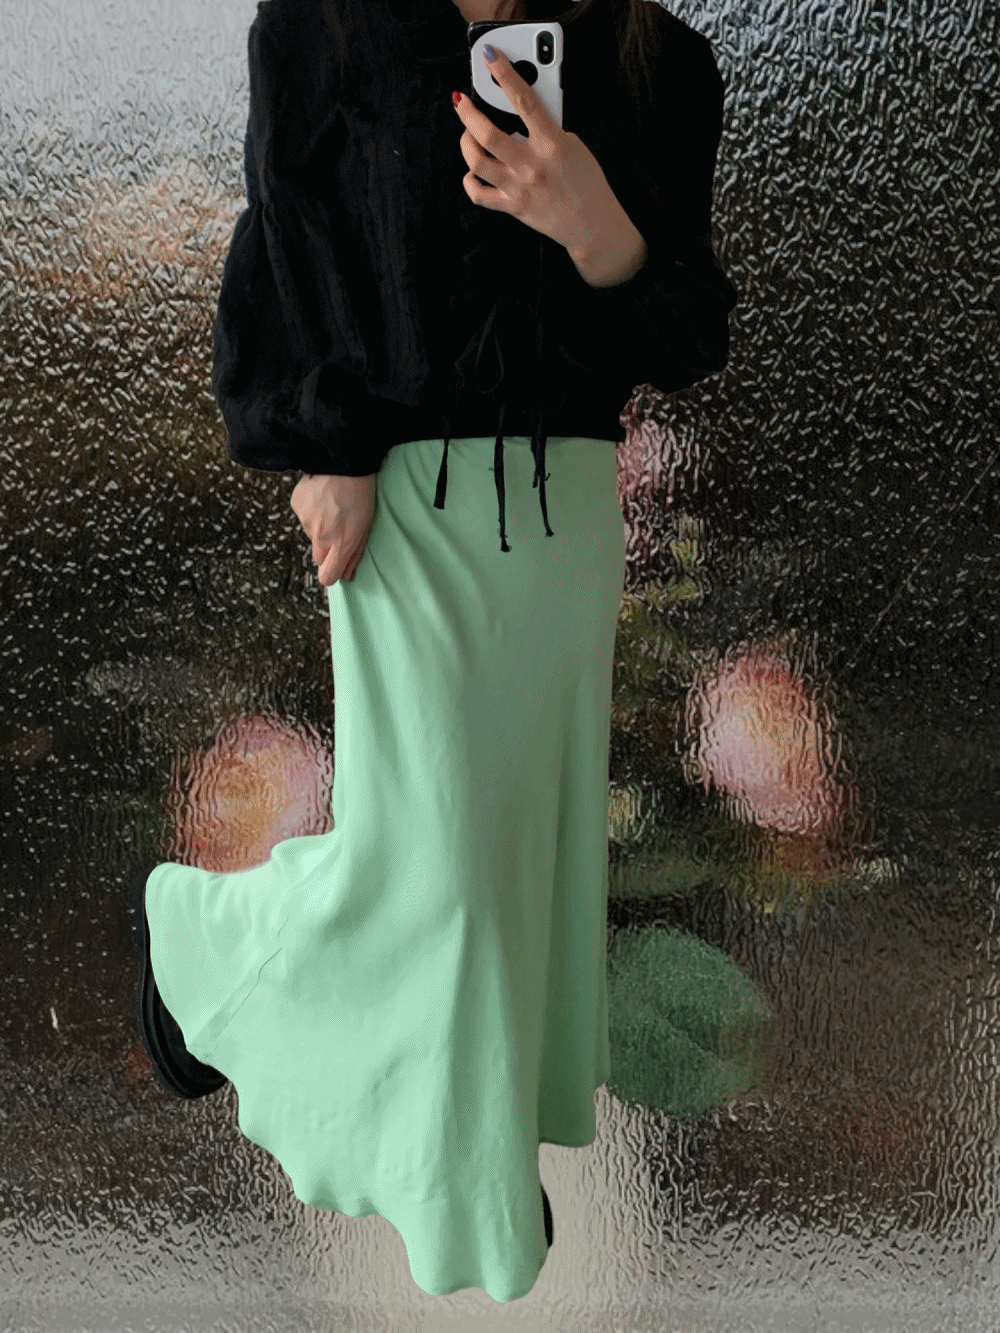 [Skirt] Ariel vivid satin skirt / 5 colors